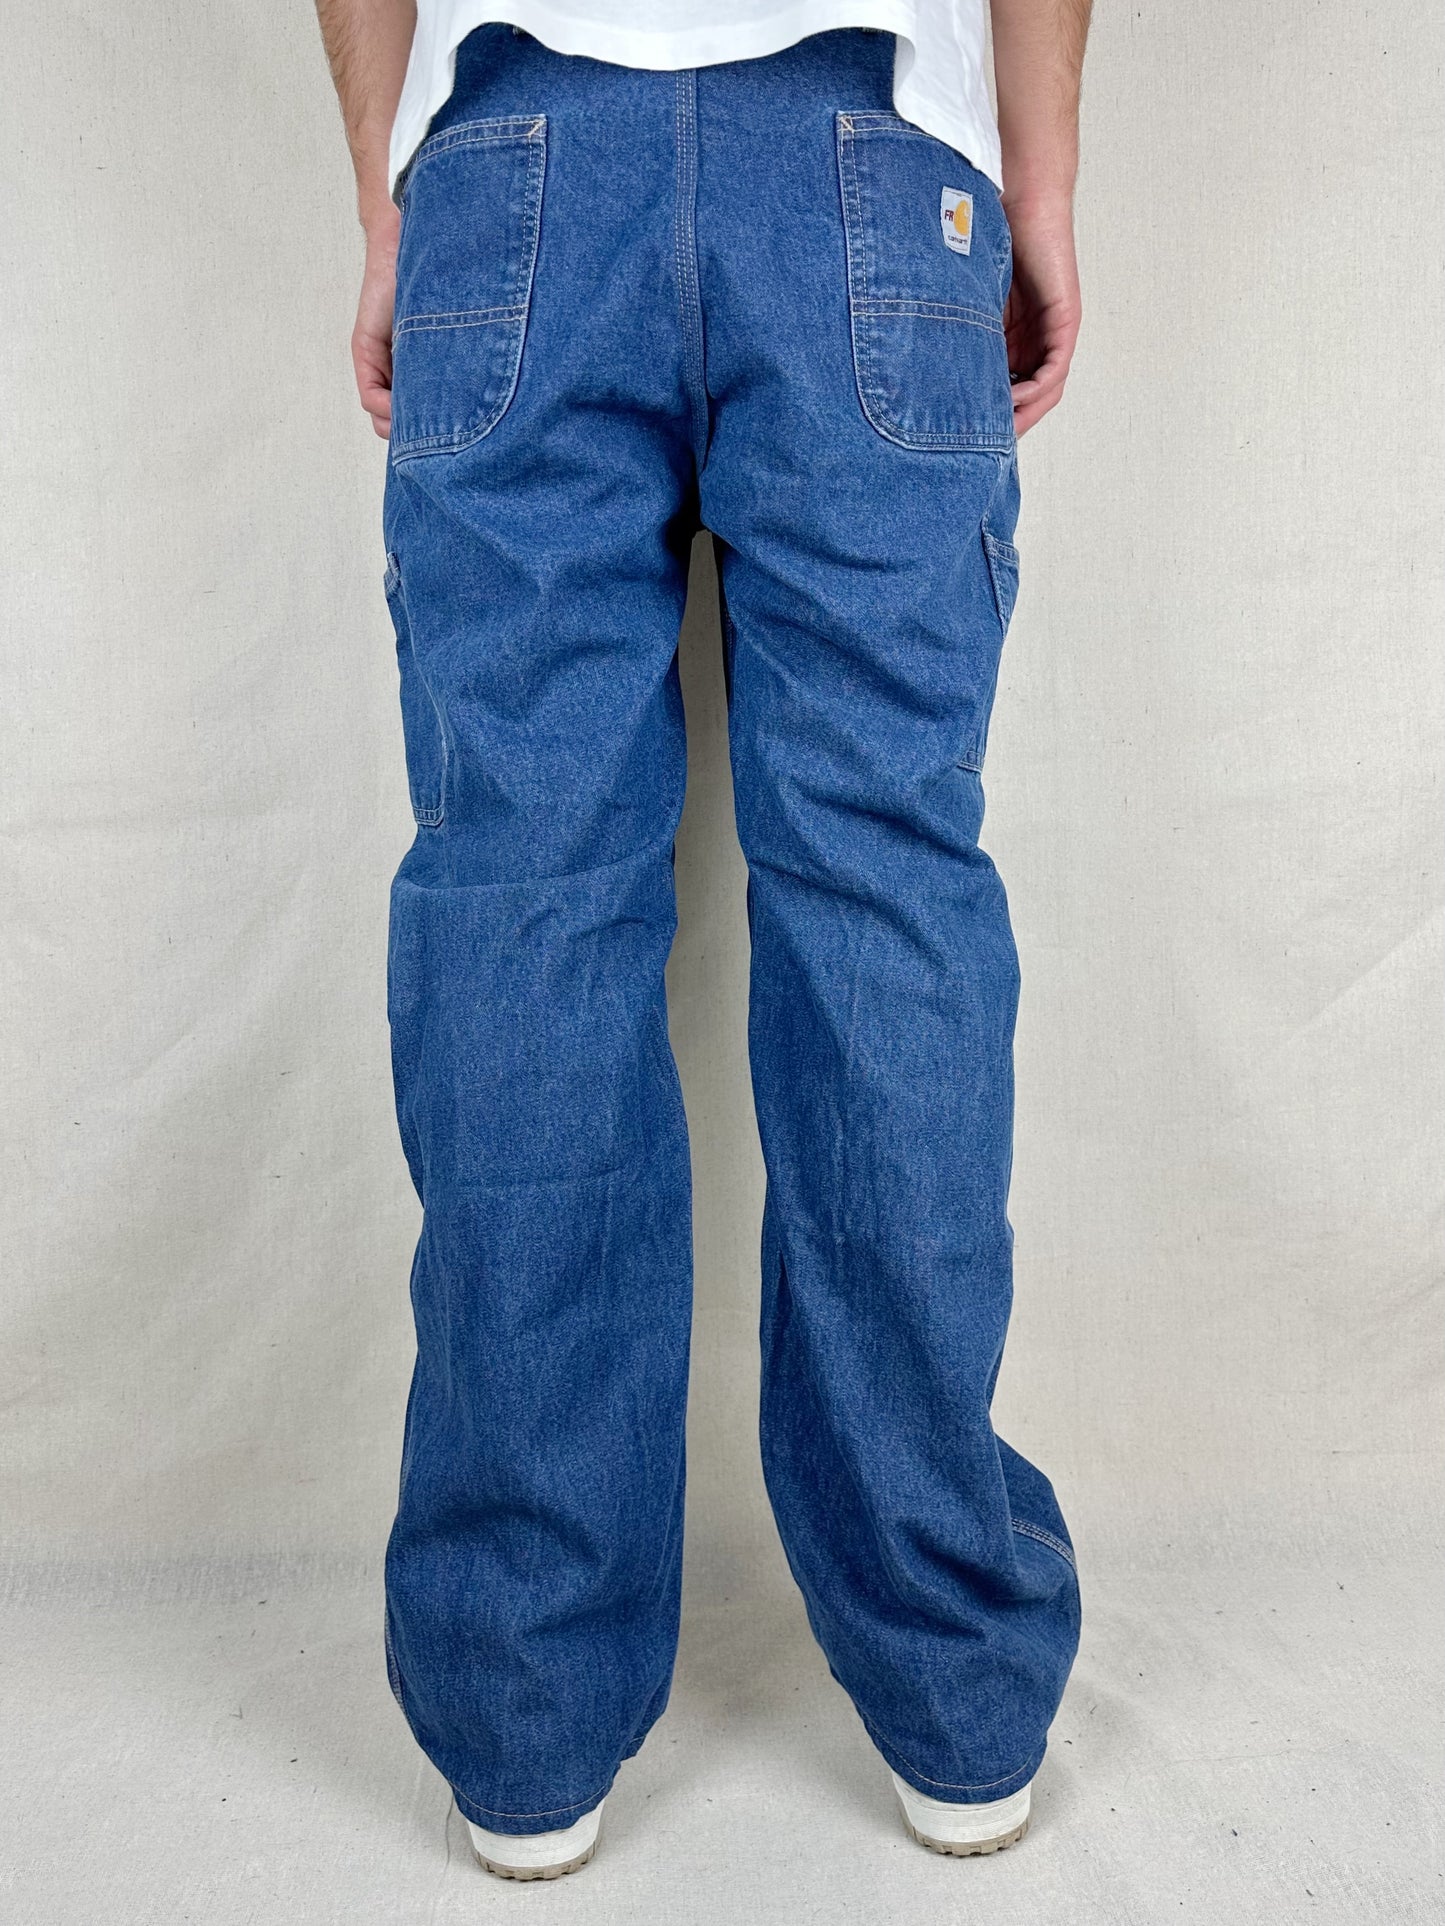 90's Carhartt Vintage Carpenter Jeans Size 30x30